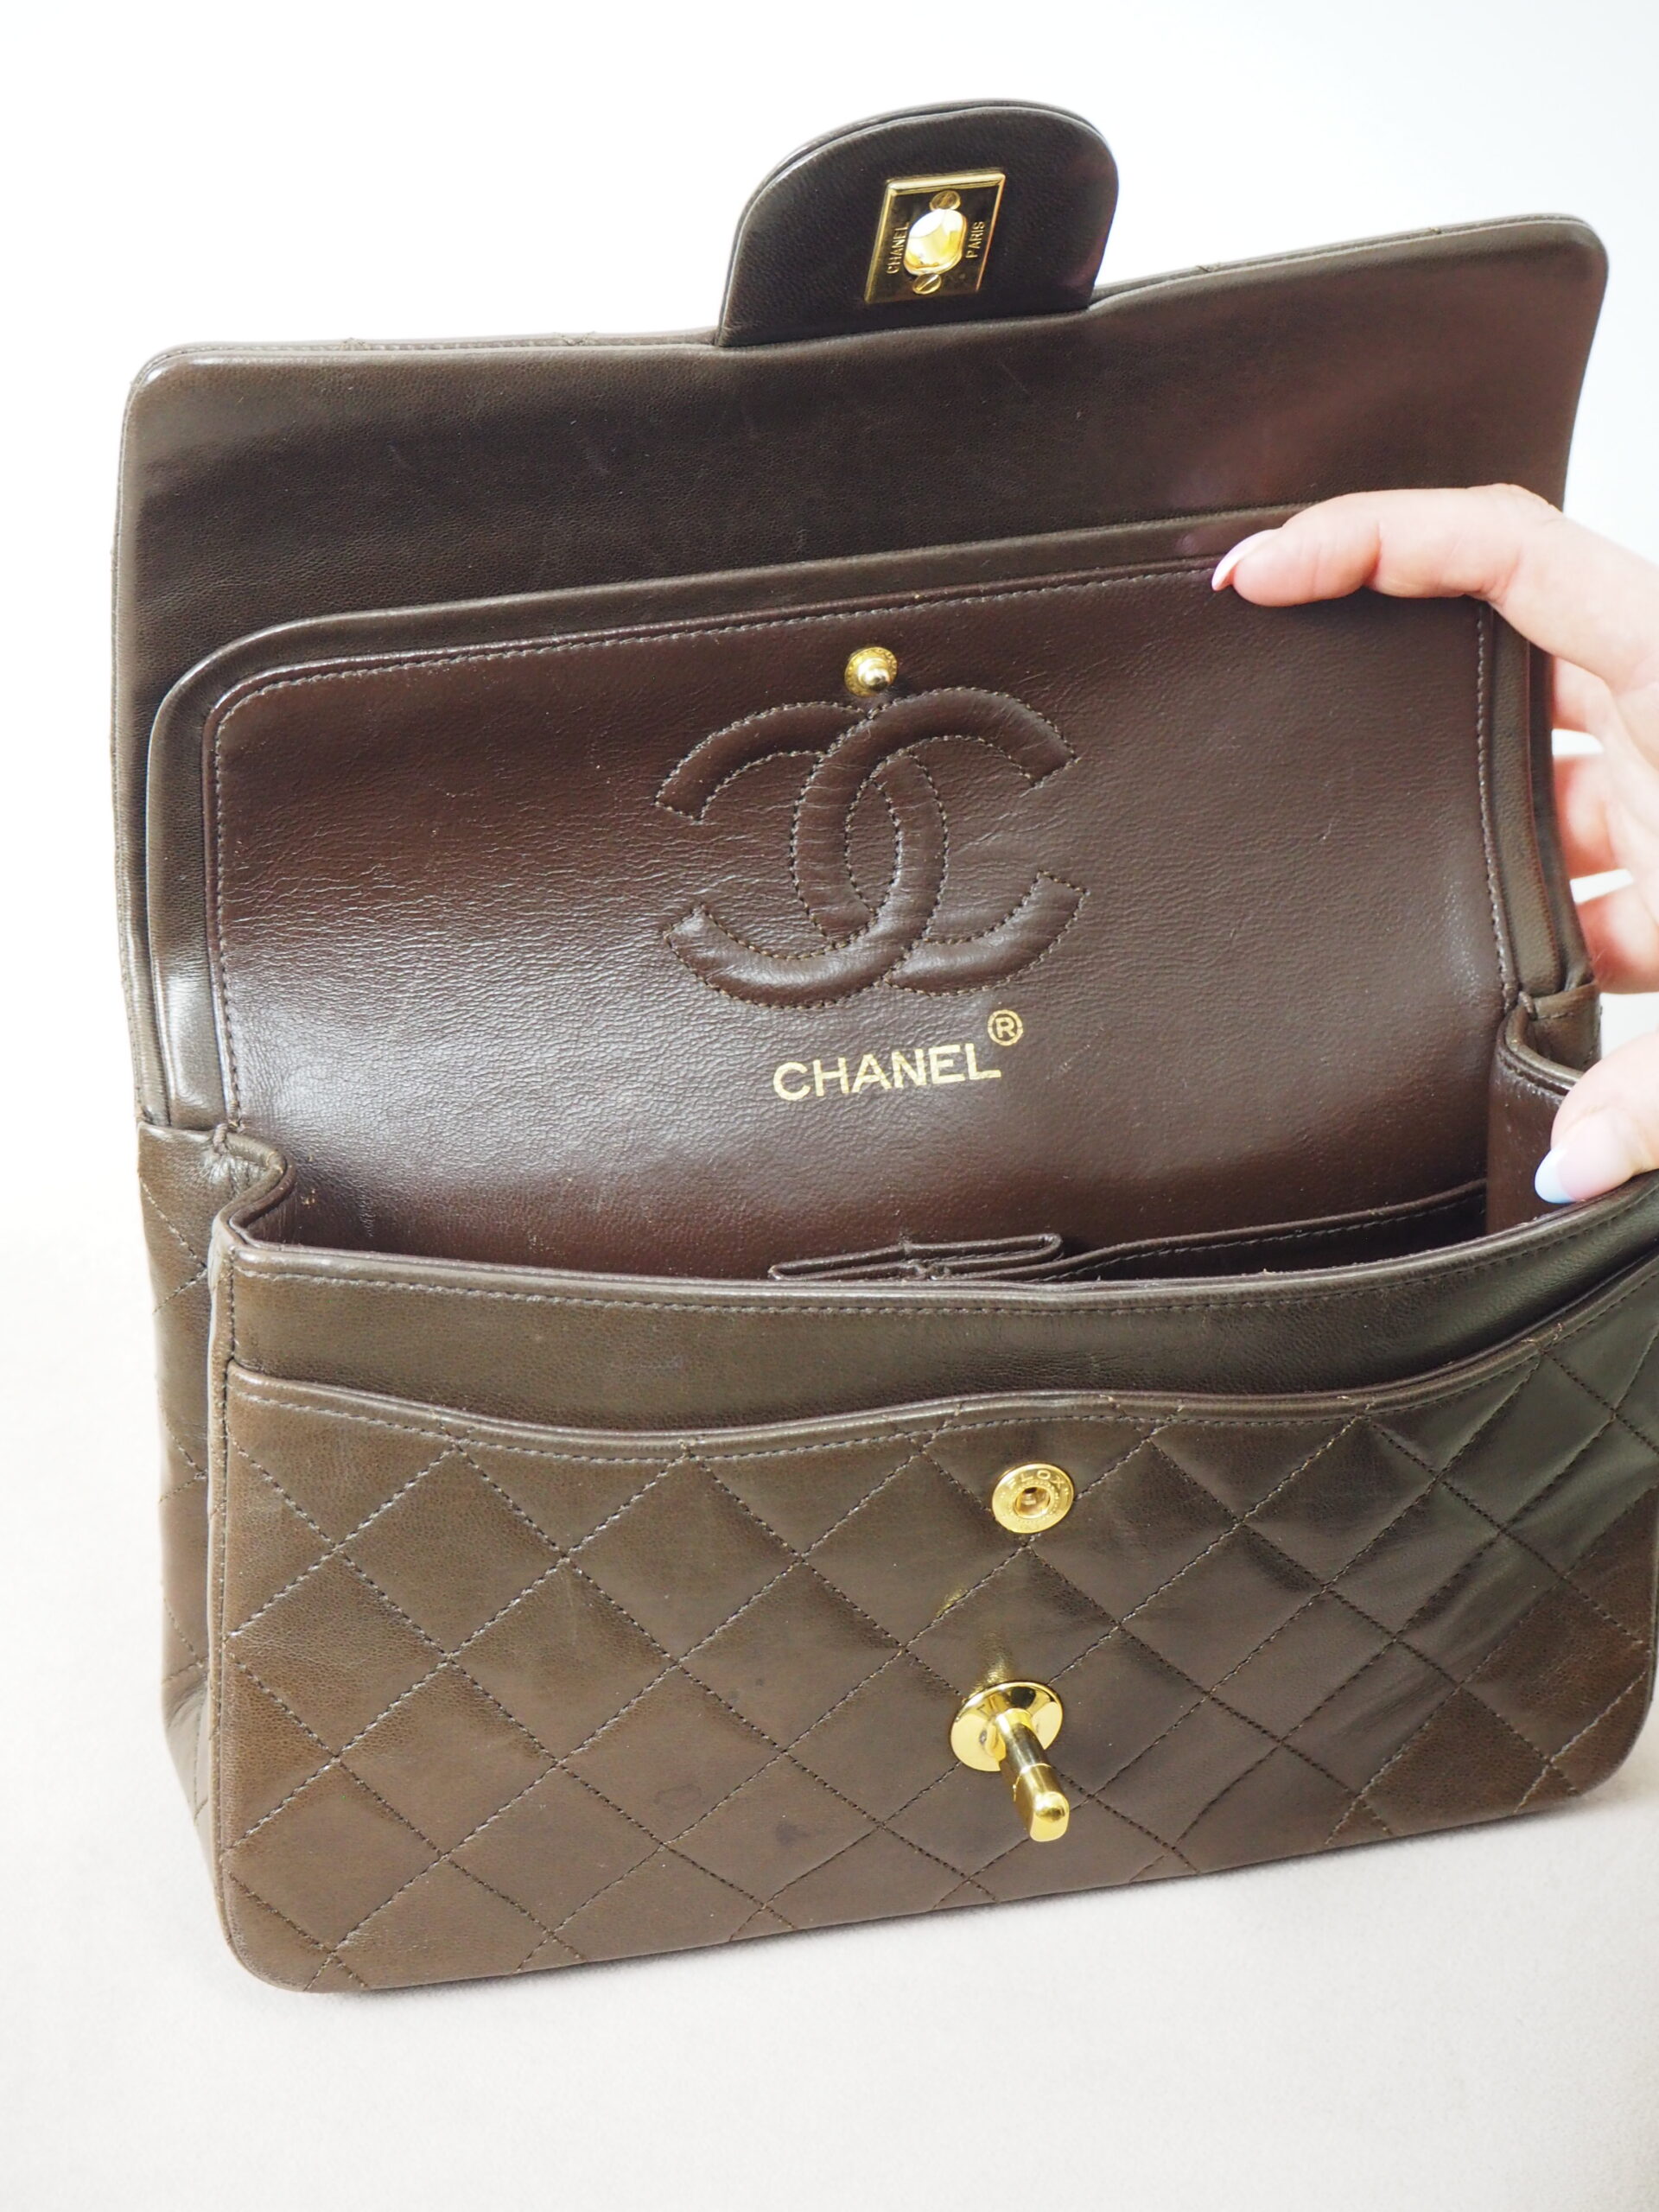 Vintage Chanel Small Classic Flap Bag CF23 - Black 003 – YST.vintage